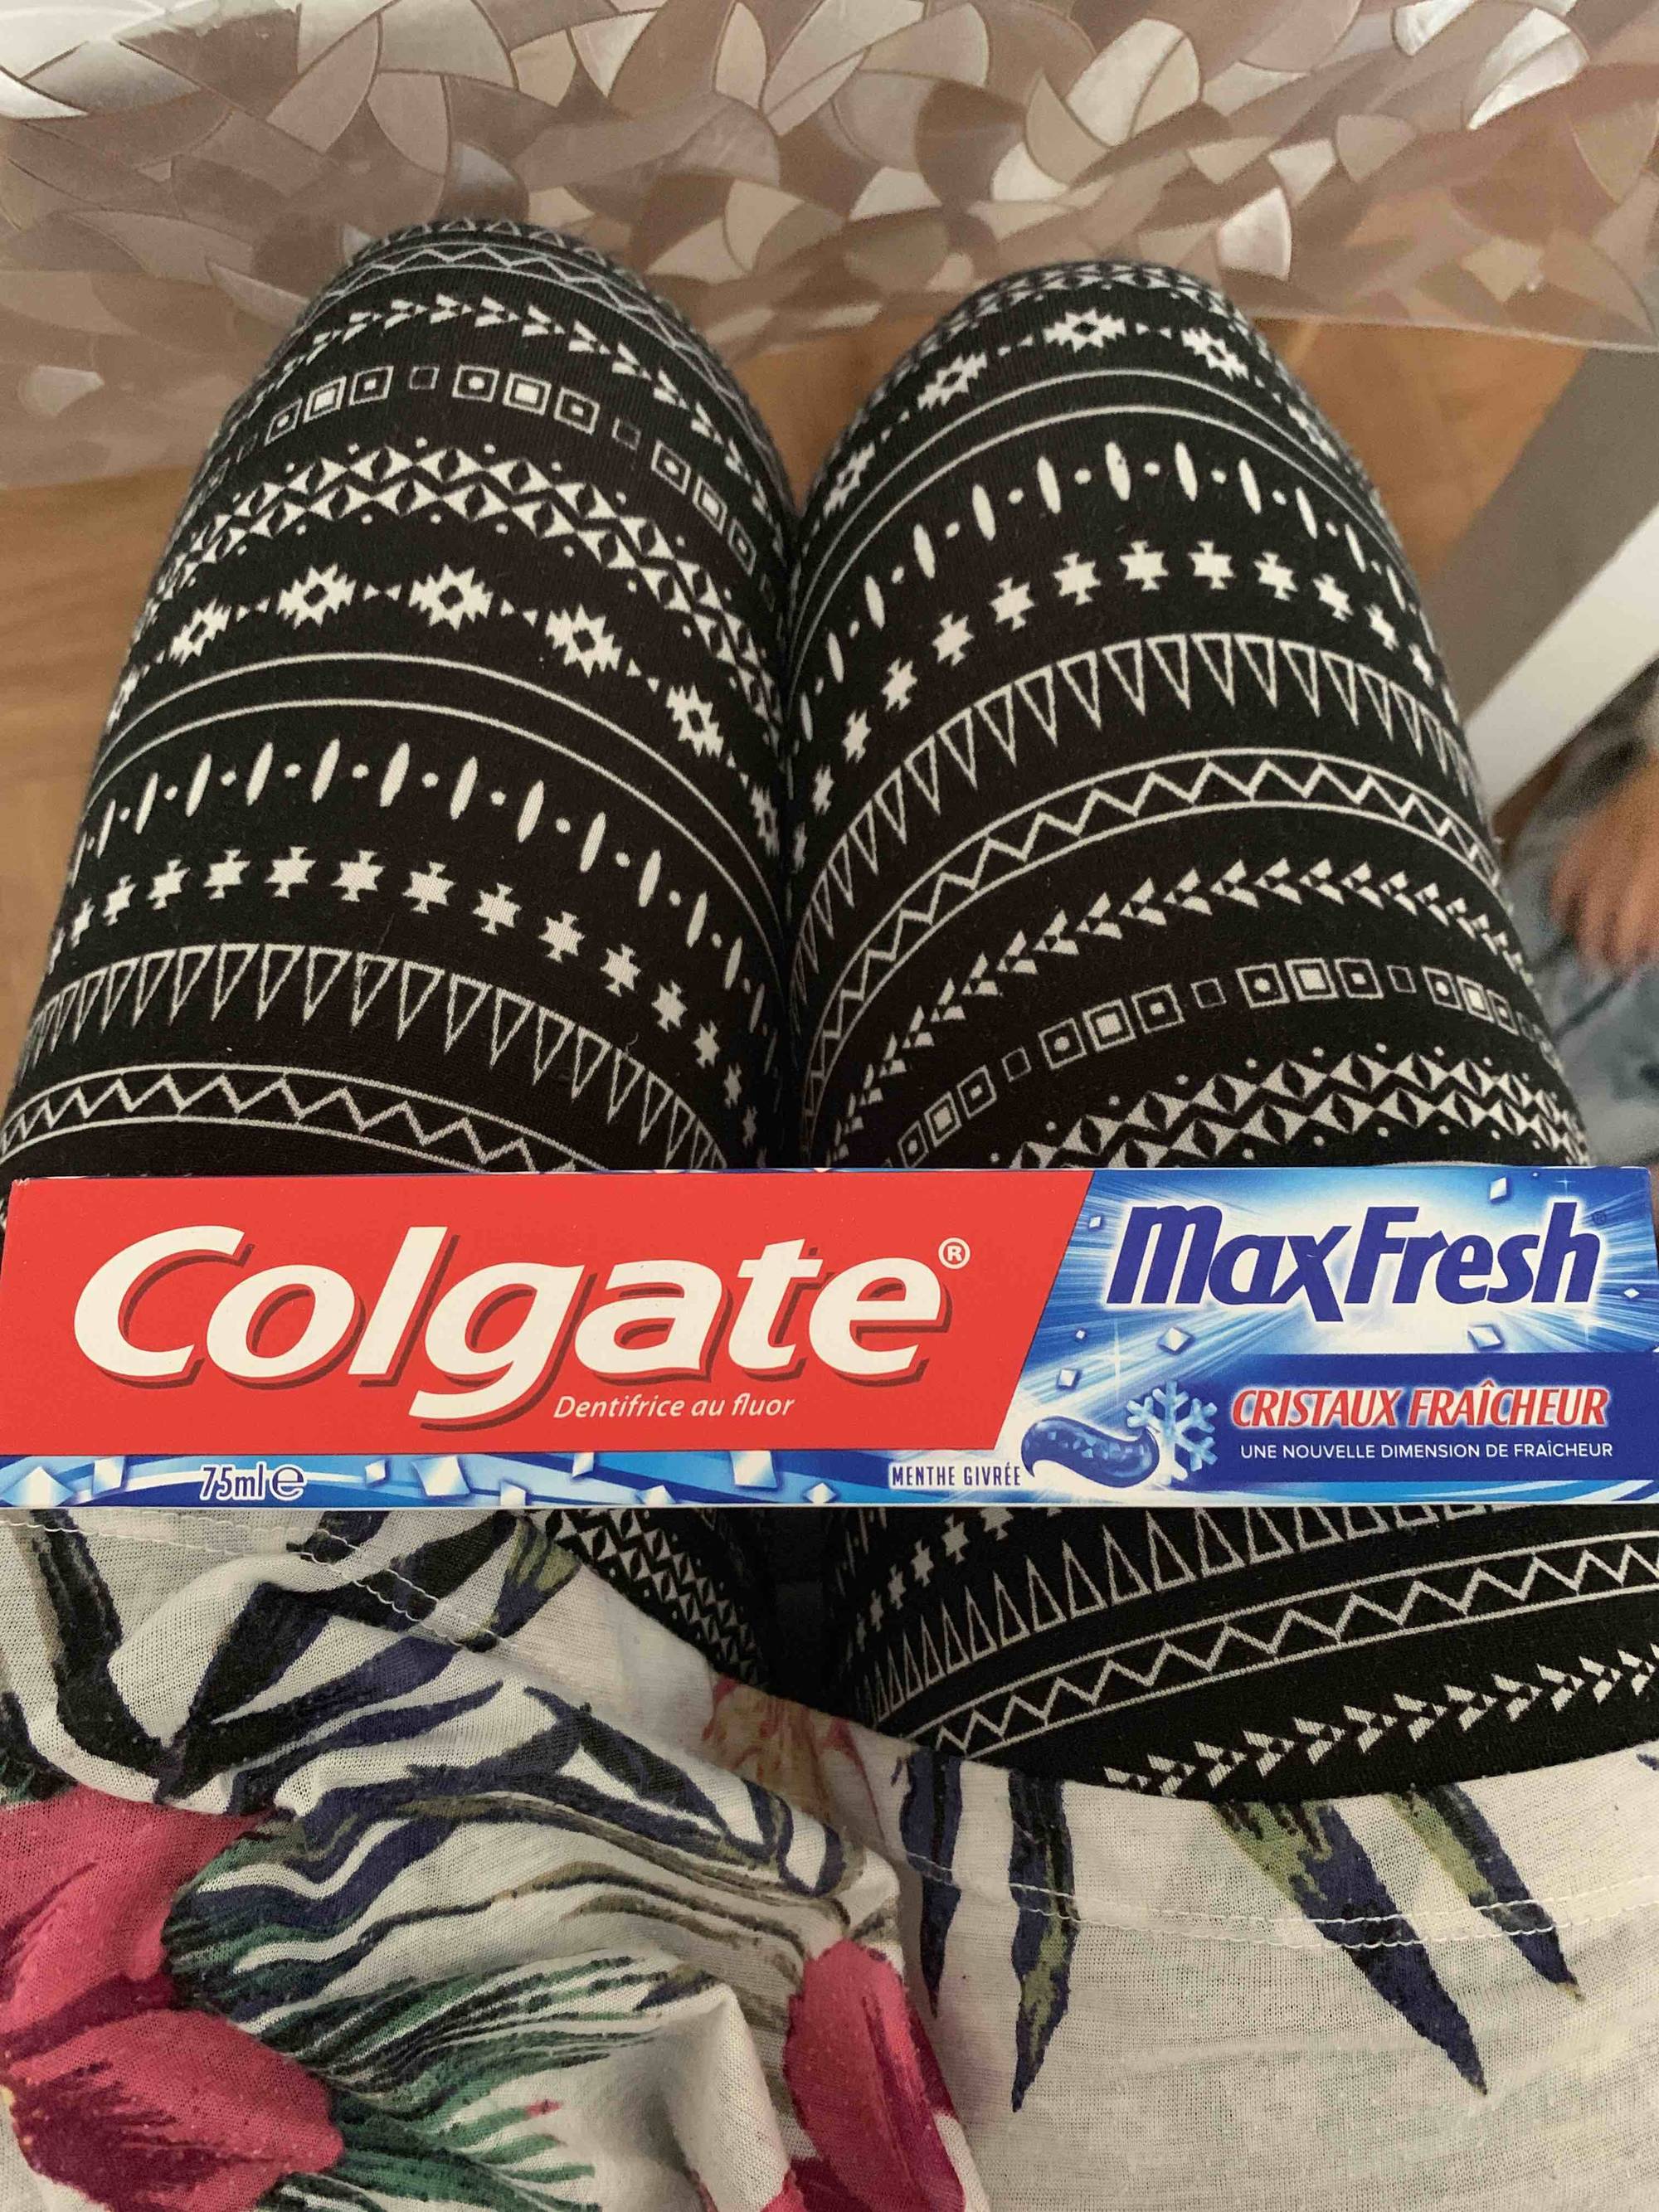 COLGATE - Max fresh - Dentifrice au fluor 